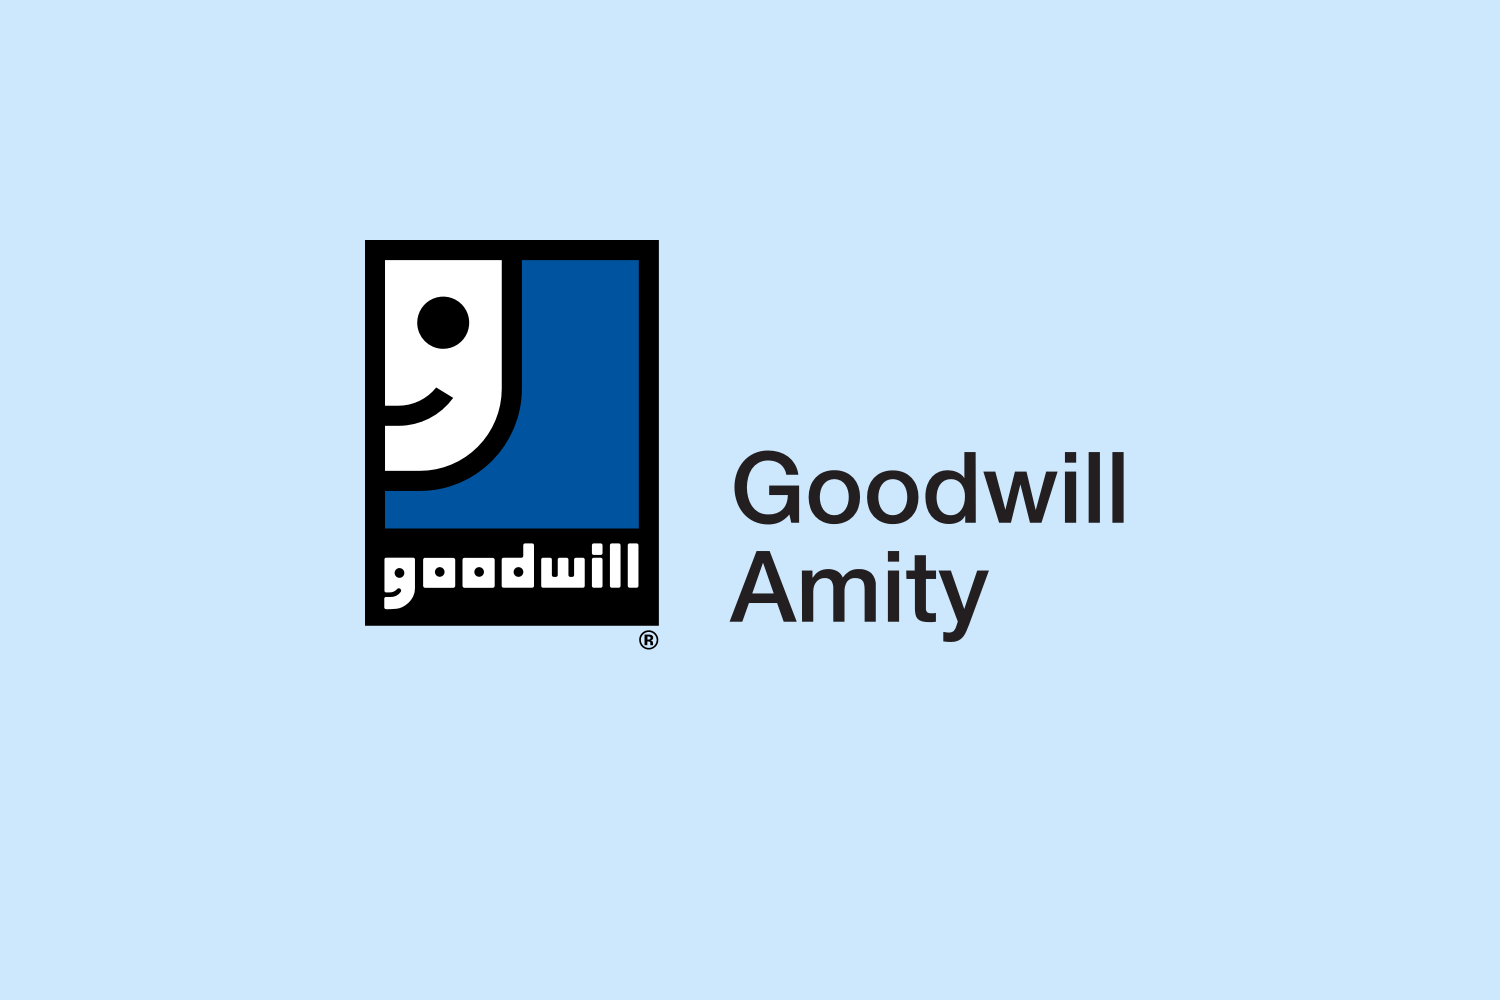 Goodwill Amity logo on blue background